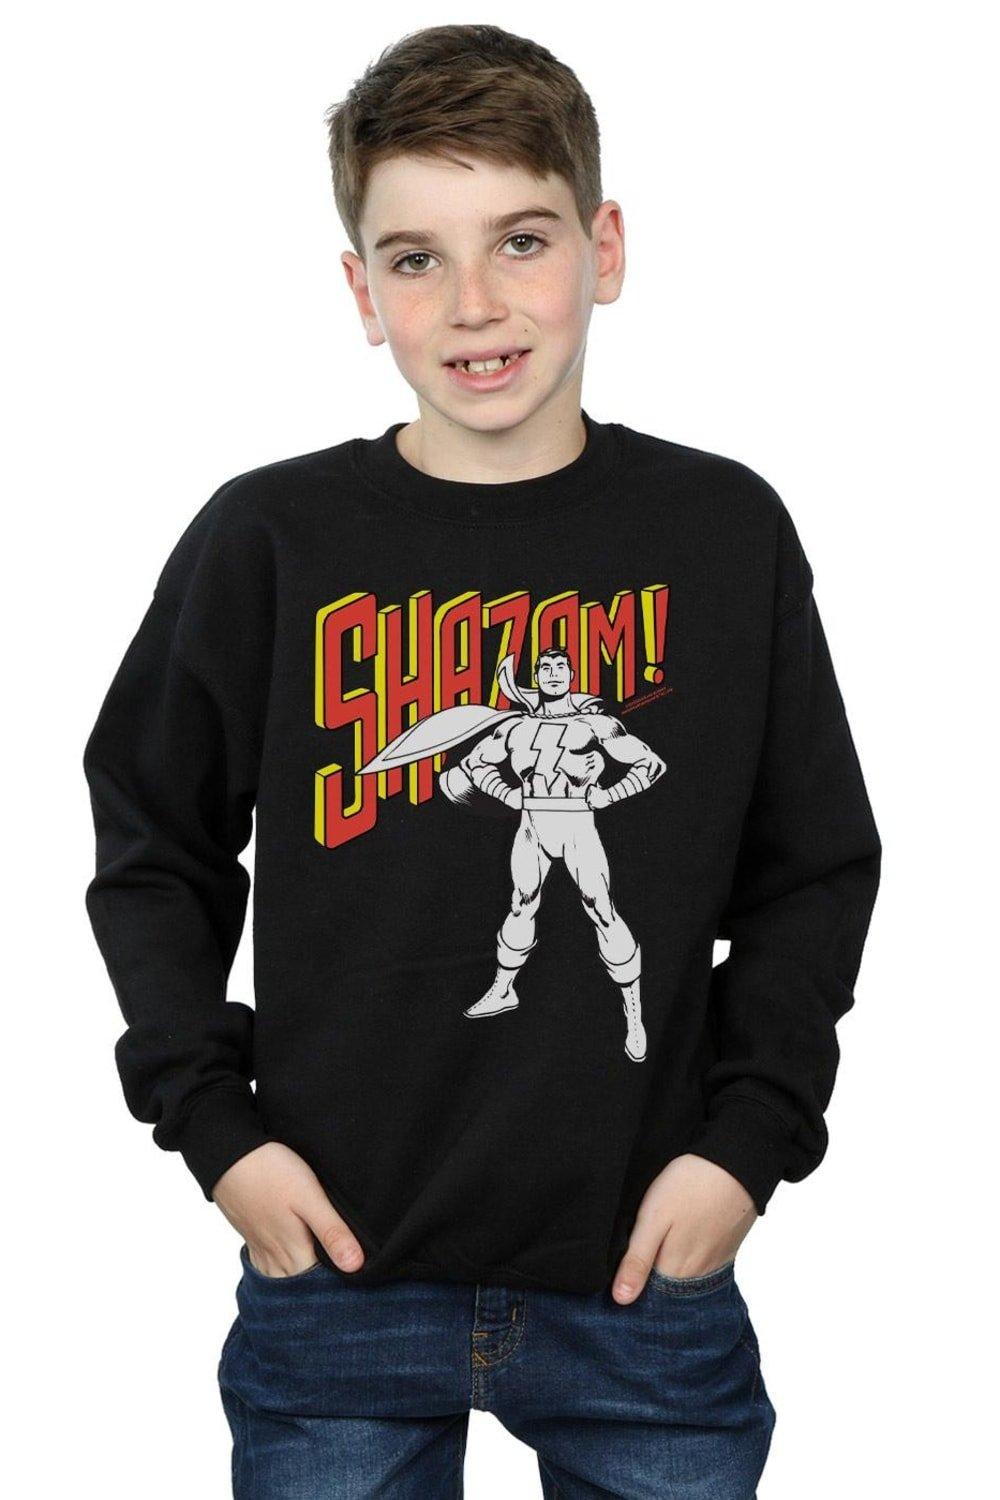 Shazam Mono Action Pose Sweatshirt